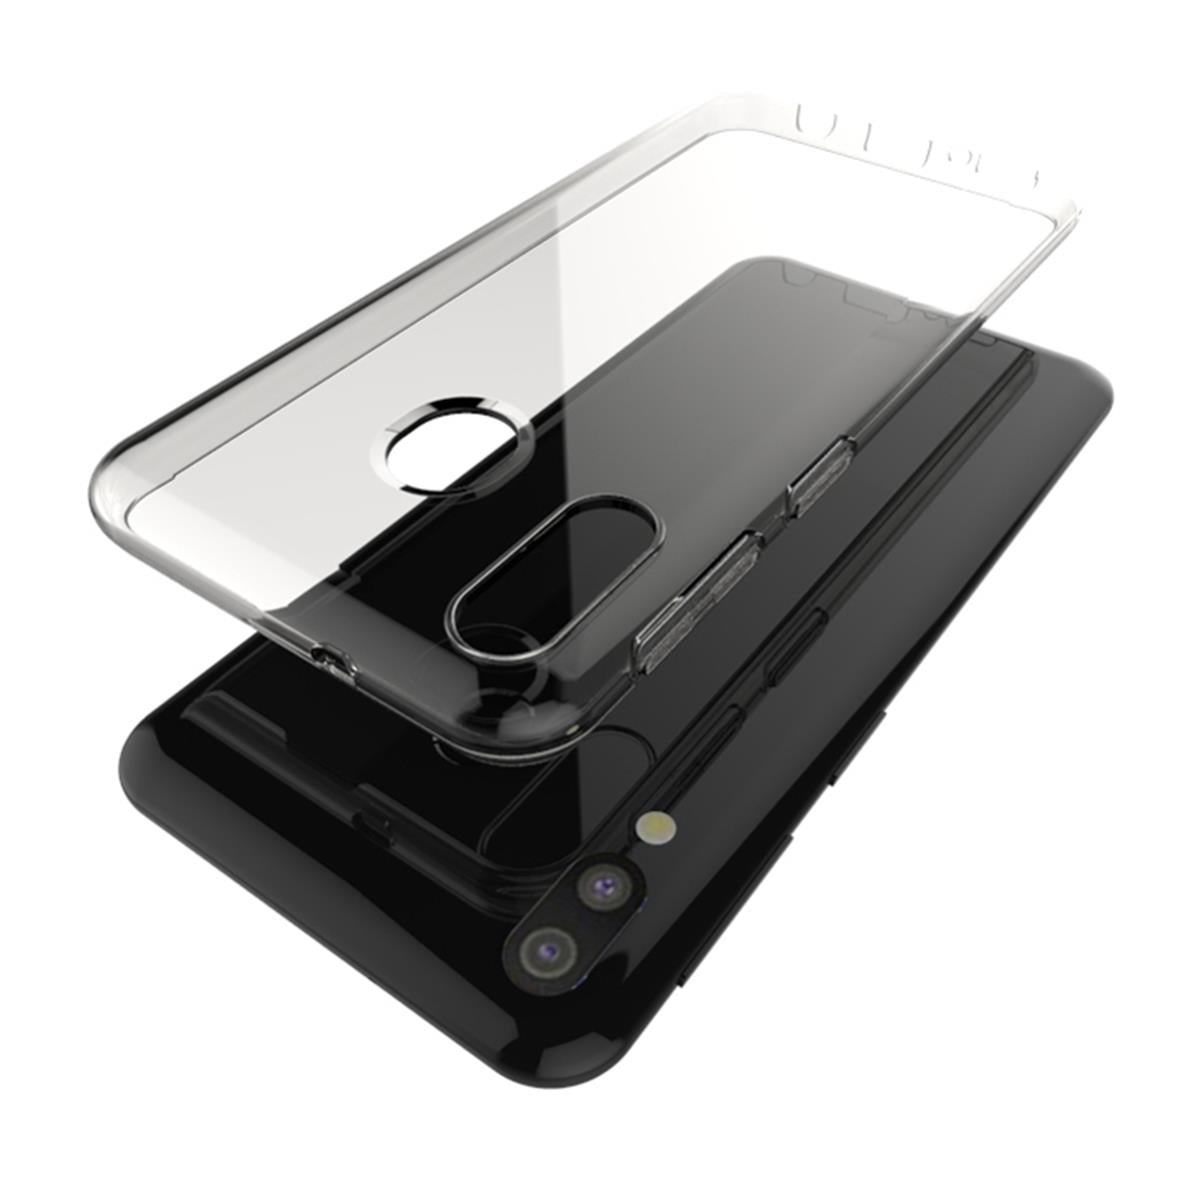 Hülle für Samsung Galaxy M20 Handyhülle Silikon Case Cover Bumper transparent